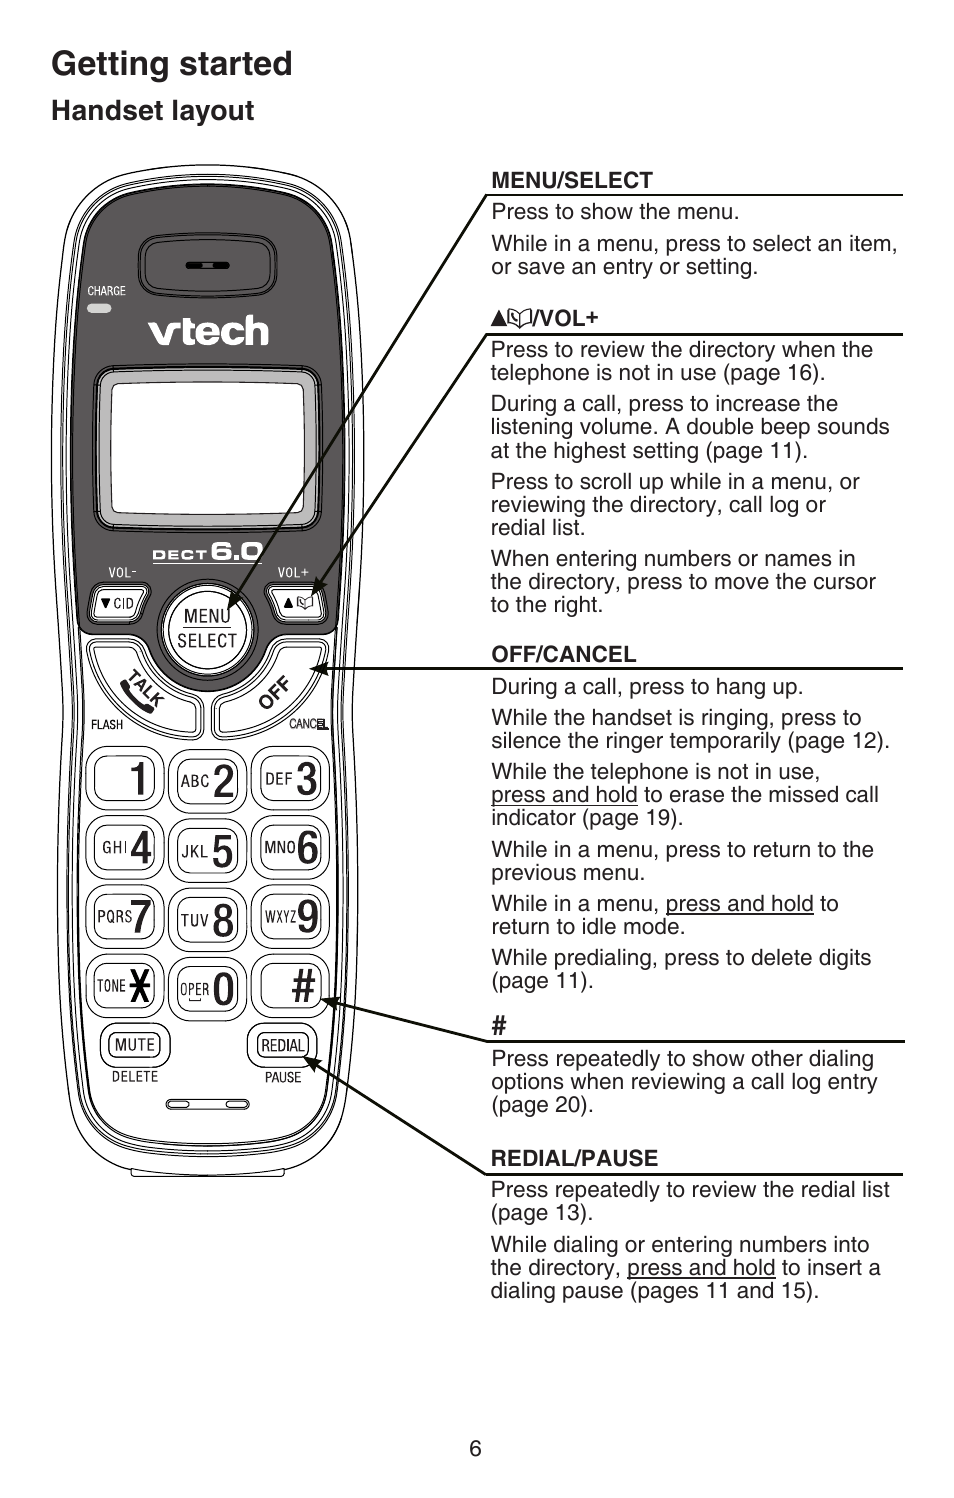 Getting started, Handset layout | VTech DECT 6.0 CS6114 User Manual